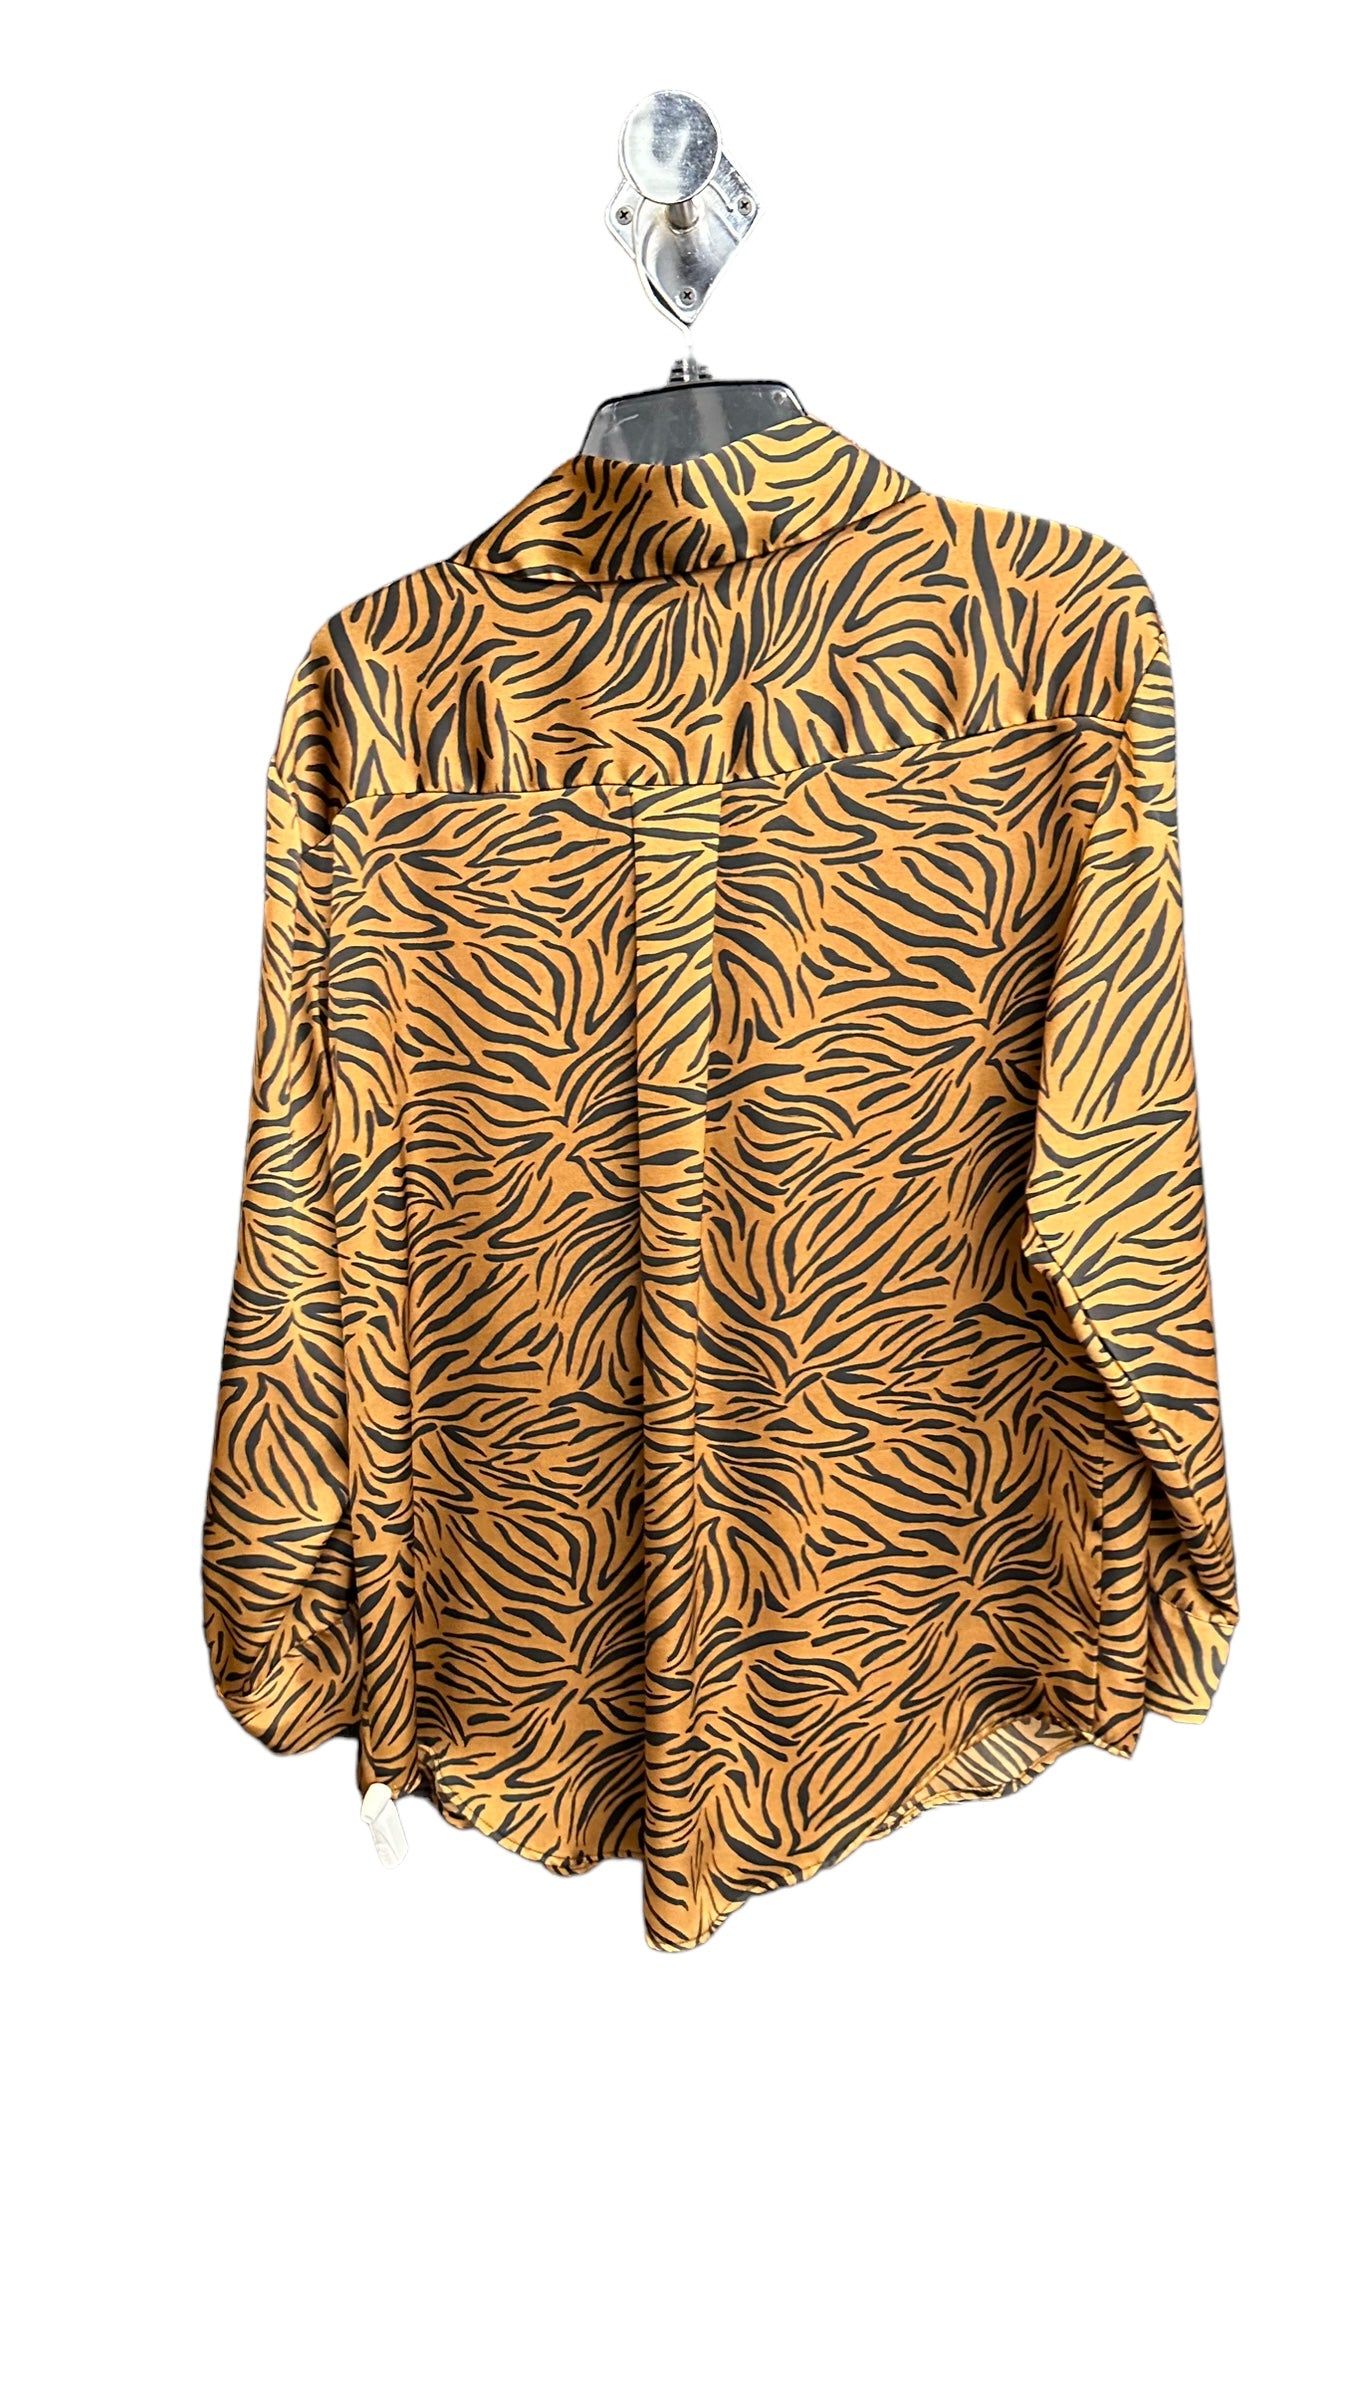 Top Long Sleeve By Zara  Size: M